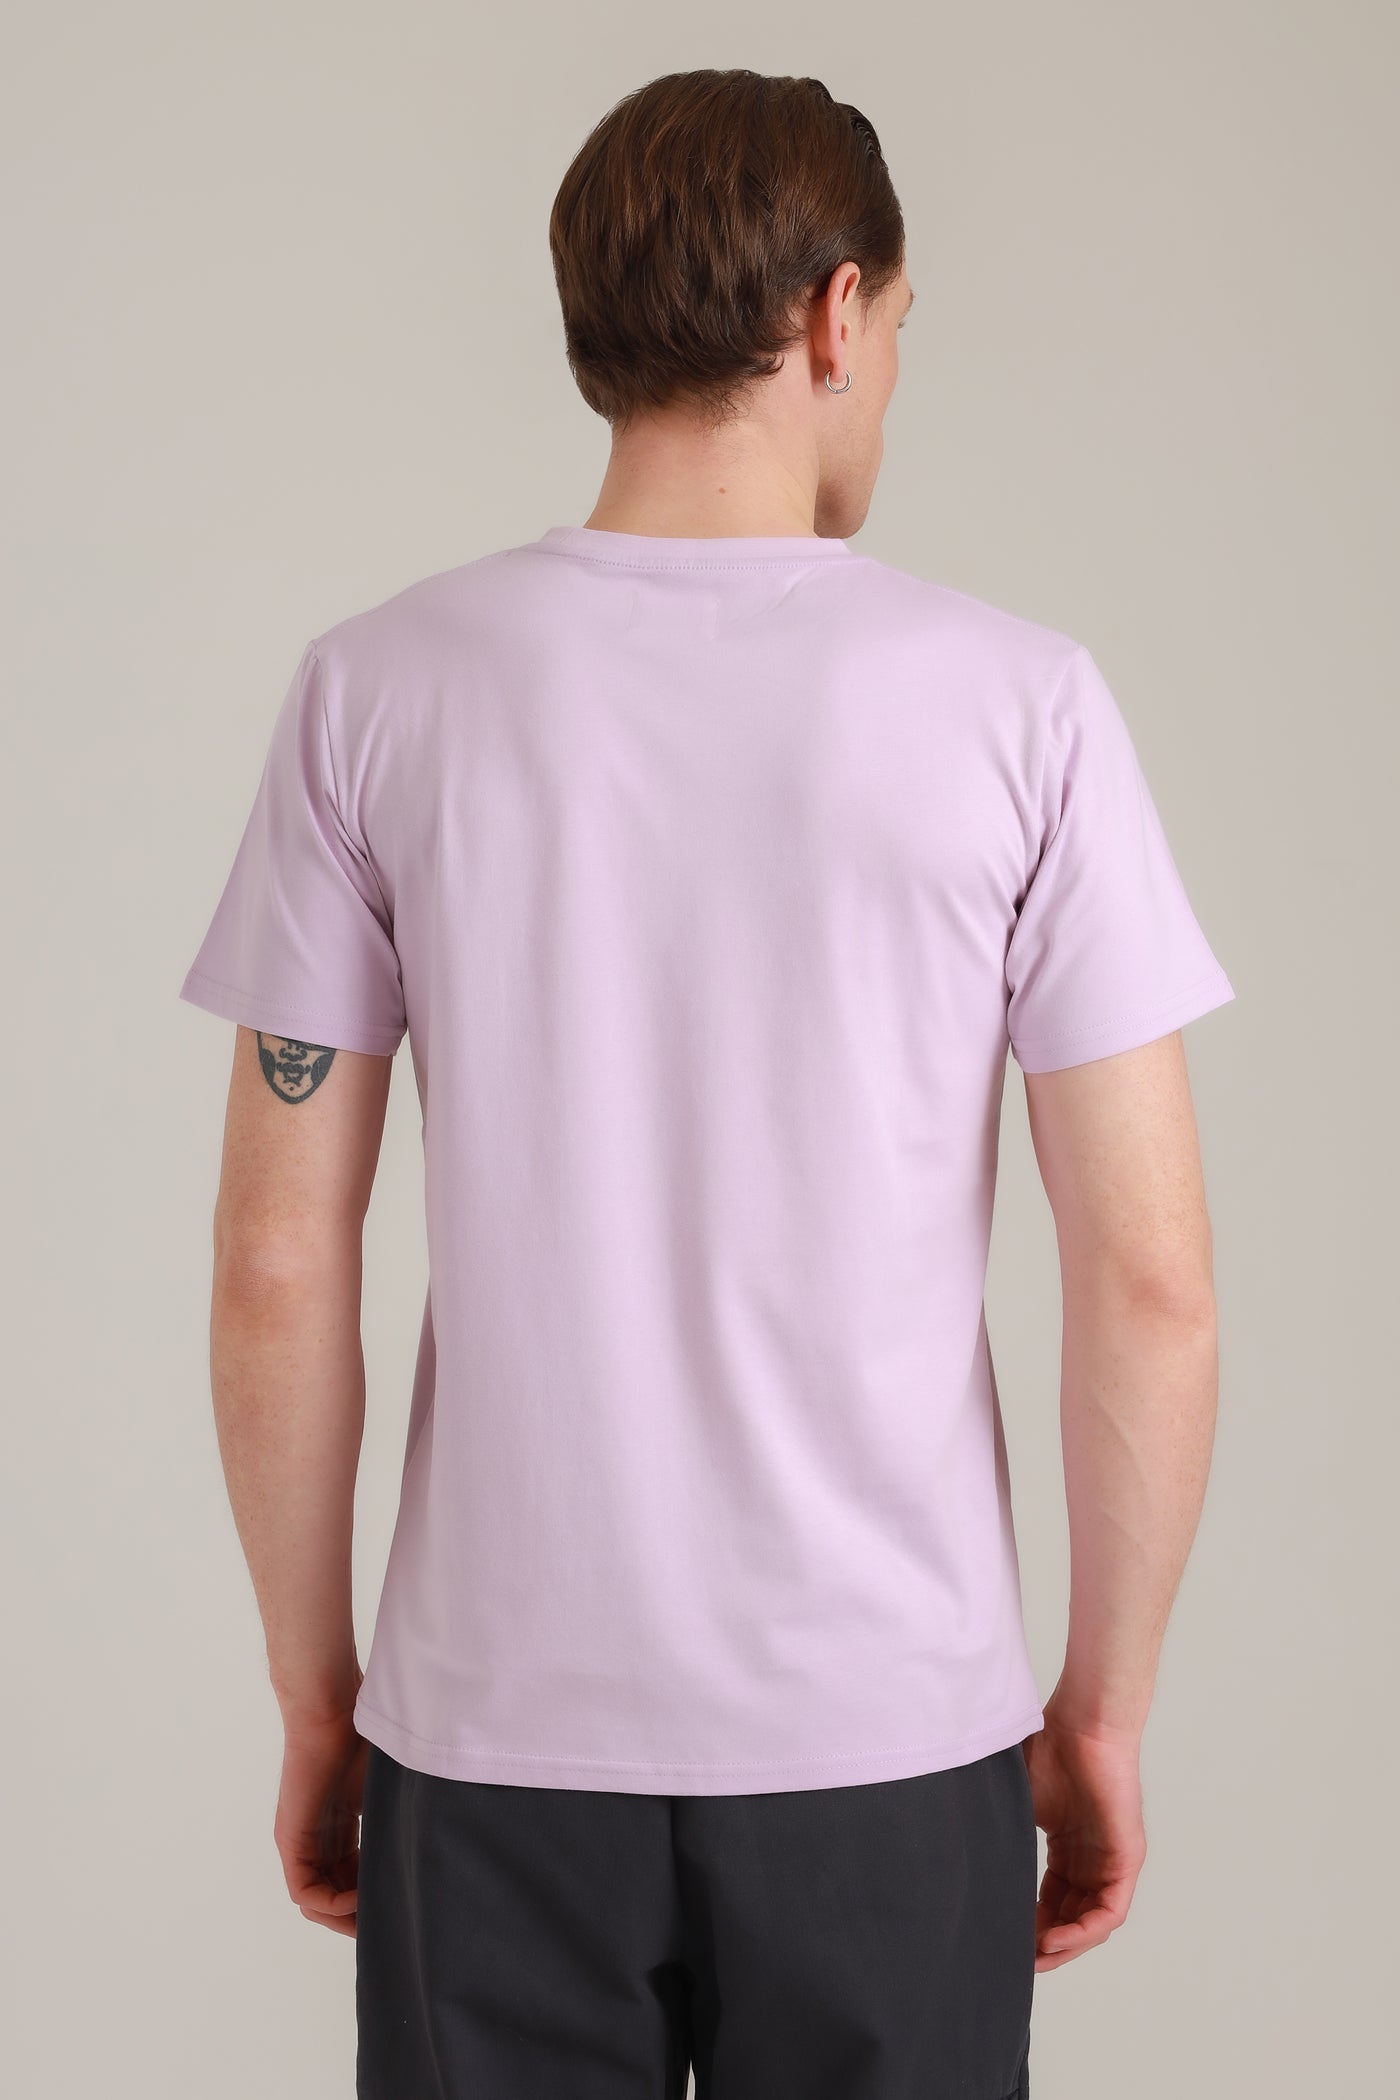 T-Shirt Men Bike Lavender